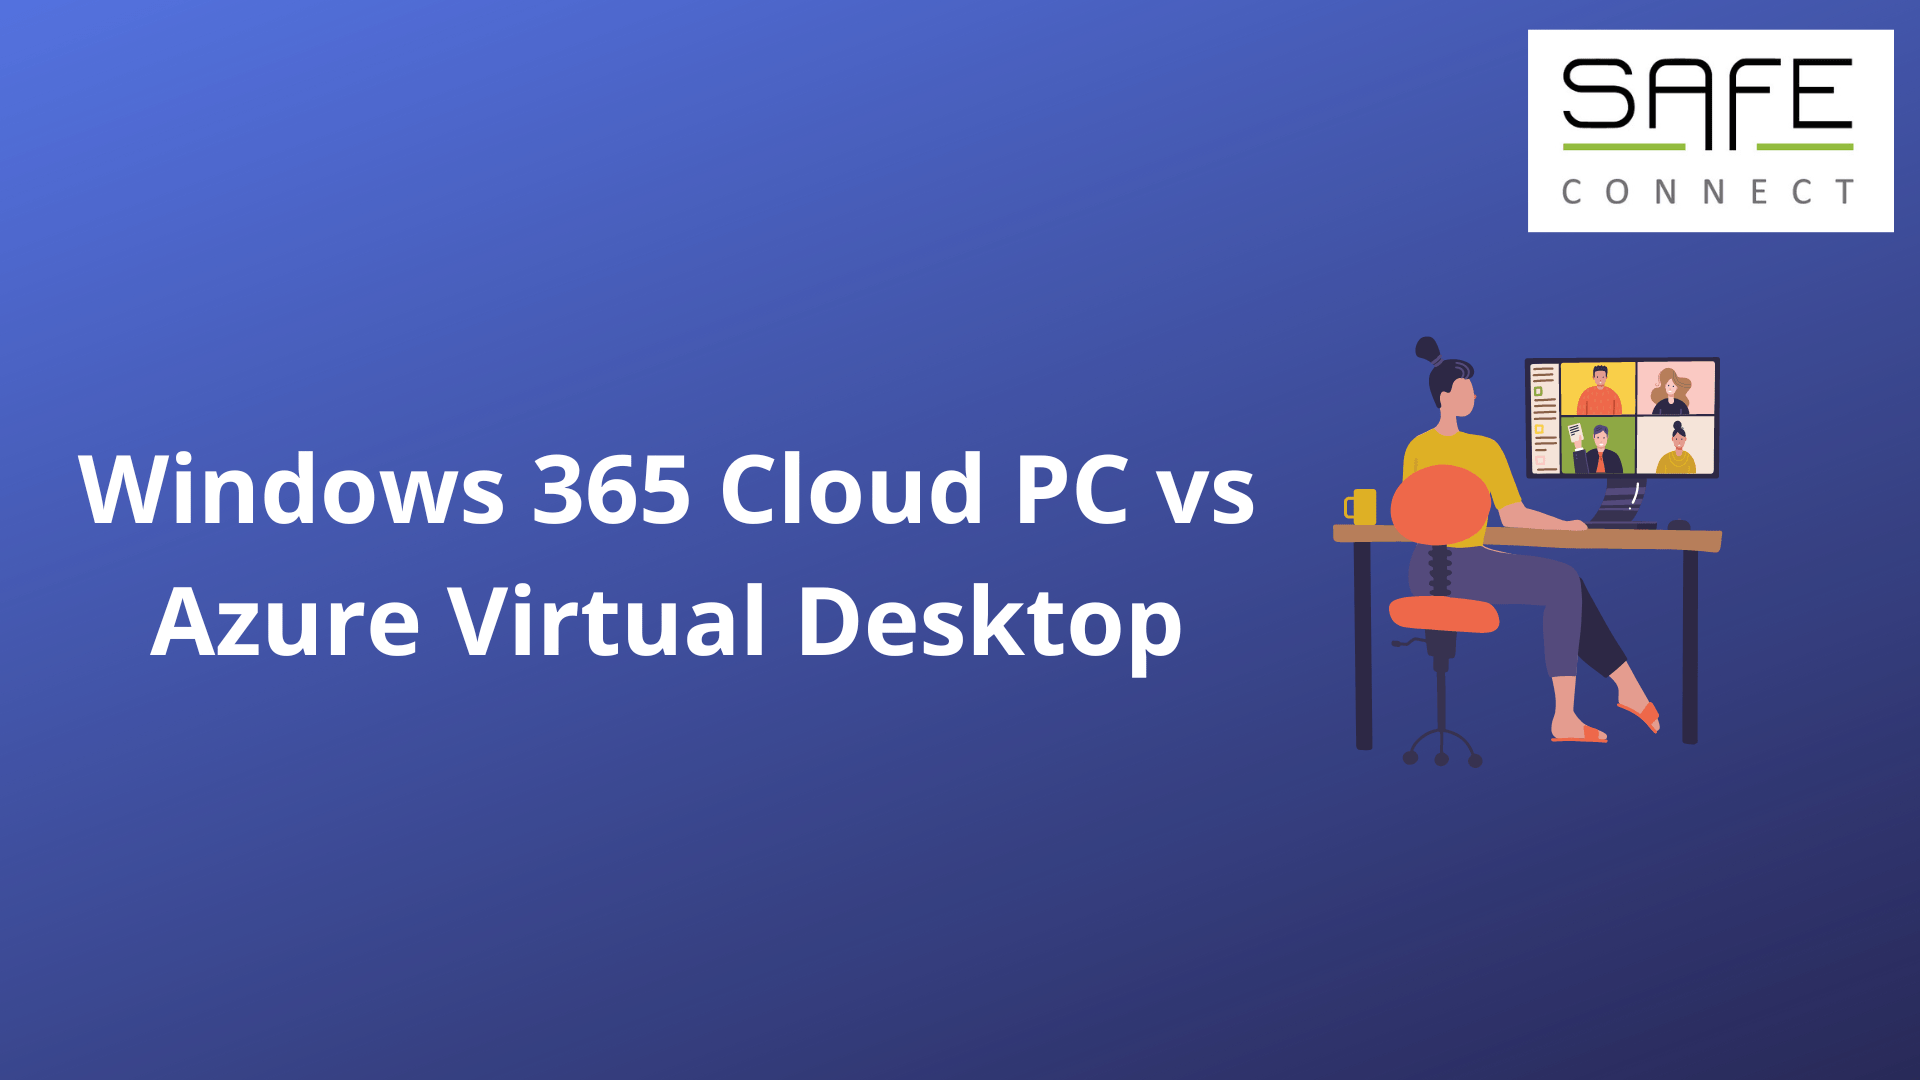 Windows 365 Cloud PC vs Azure Virtual Desktop